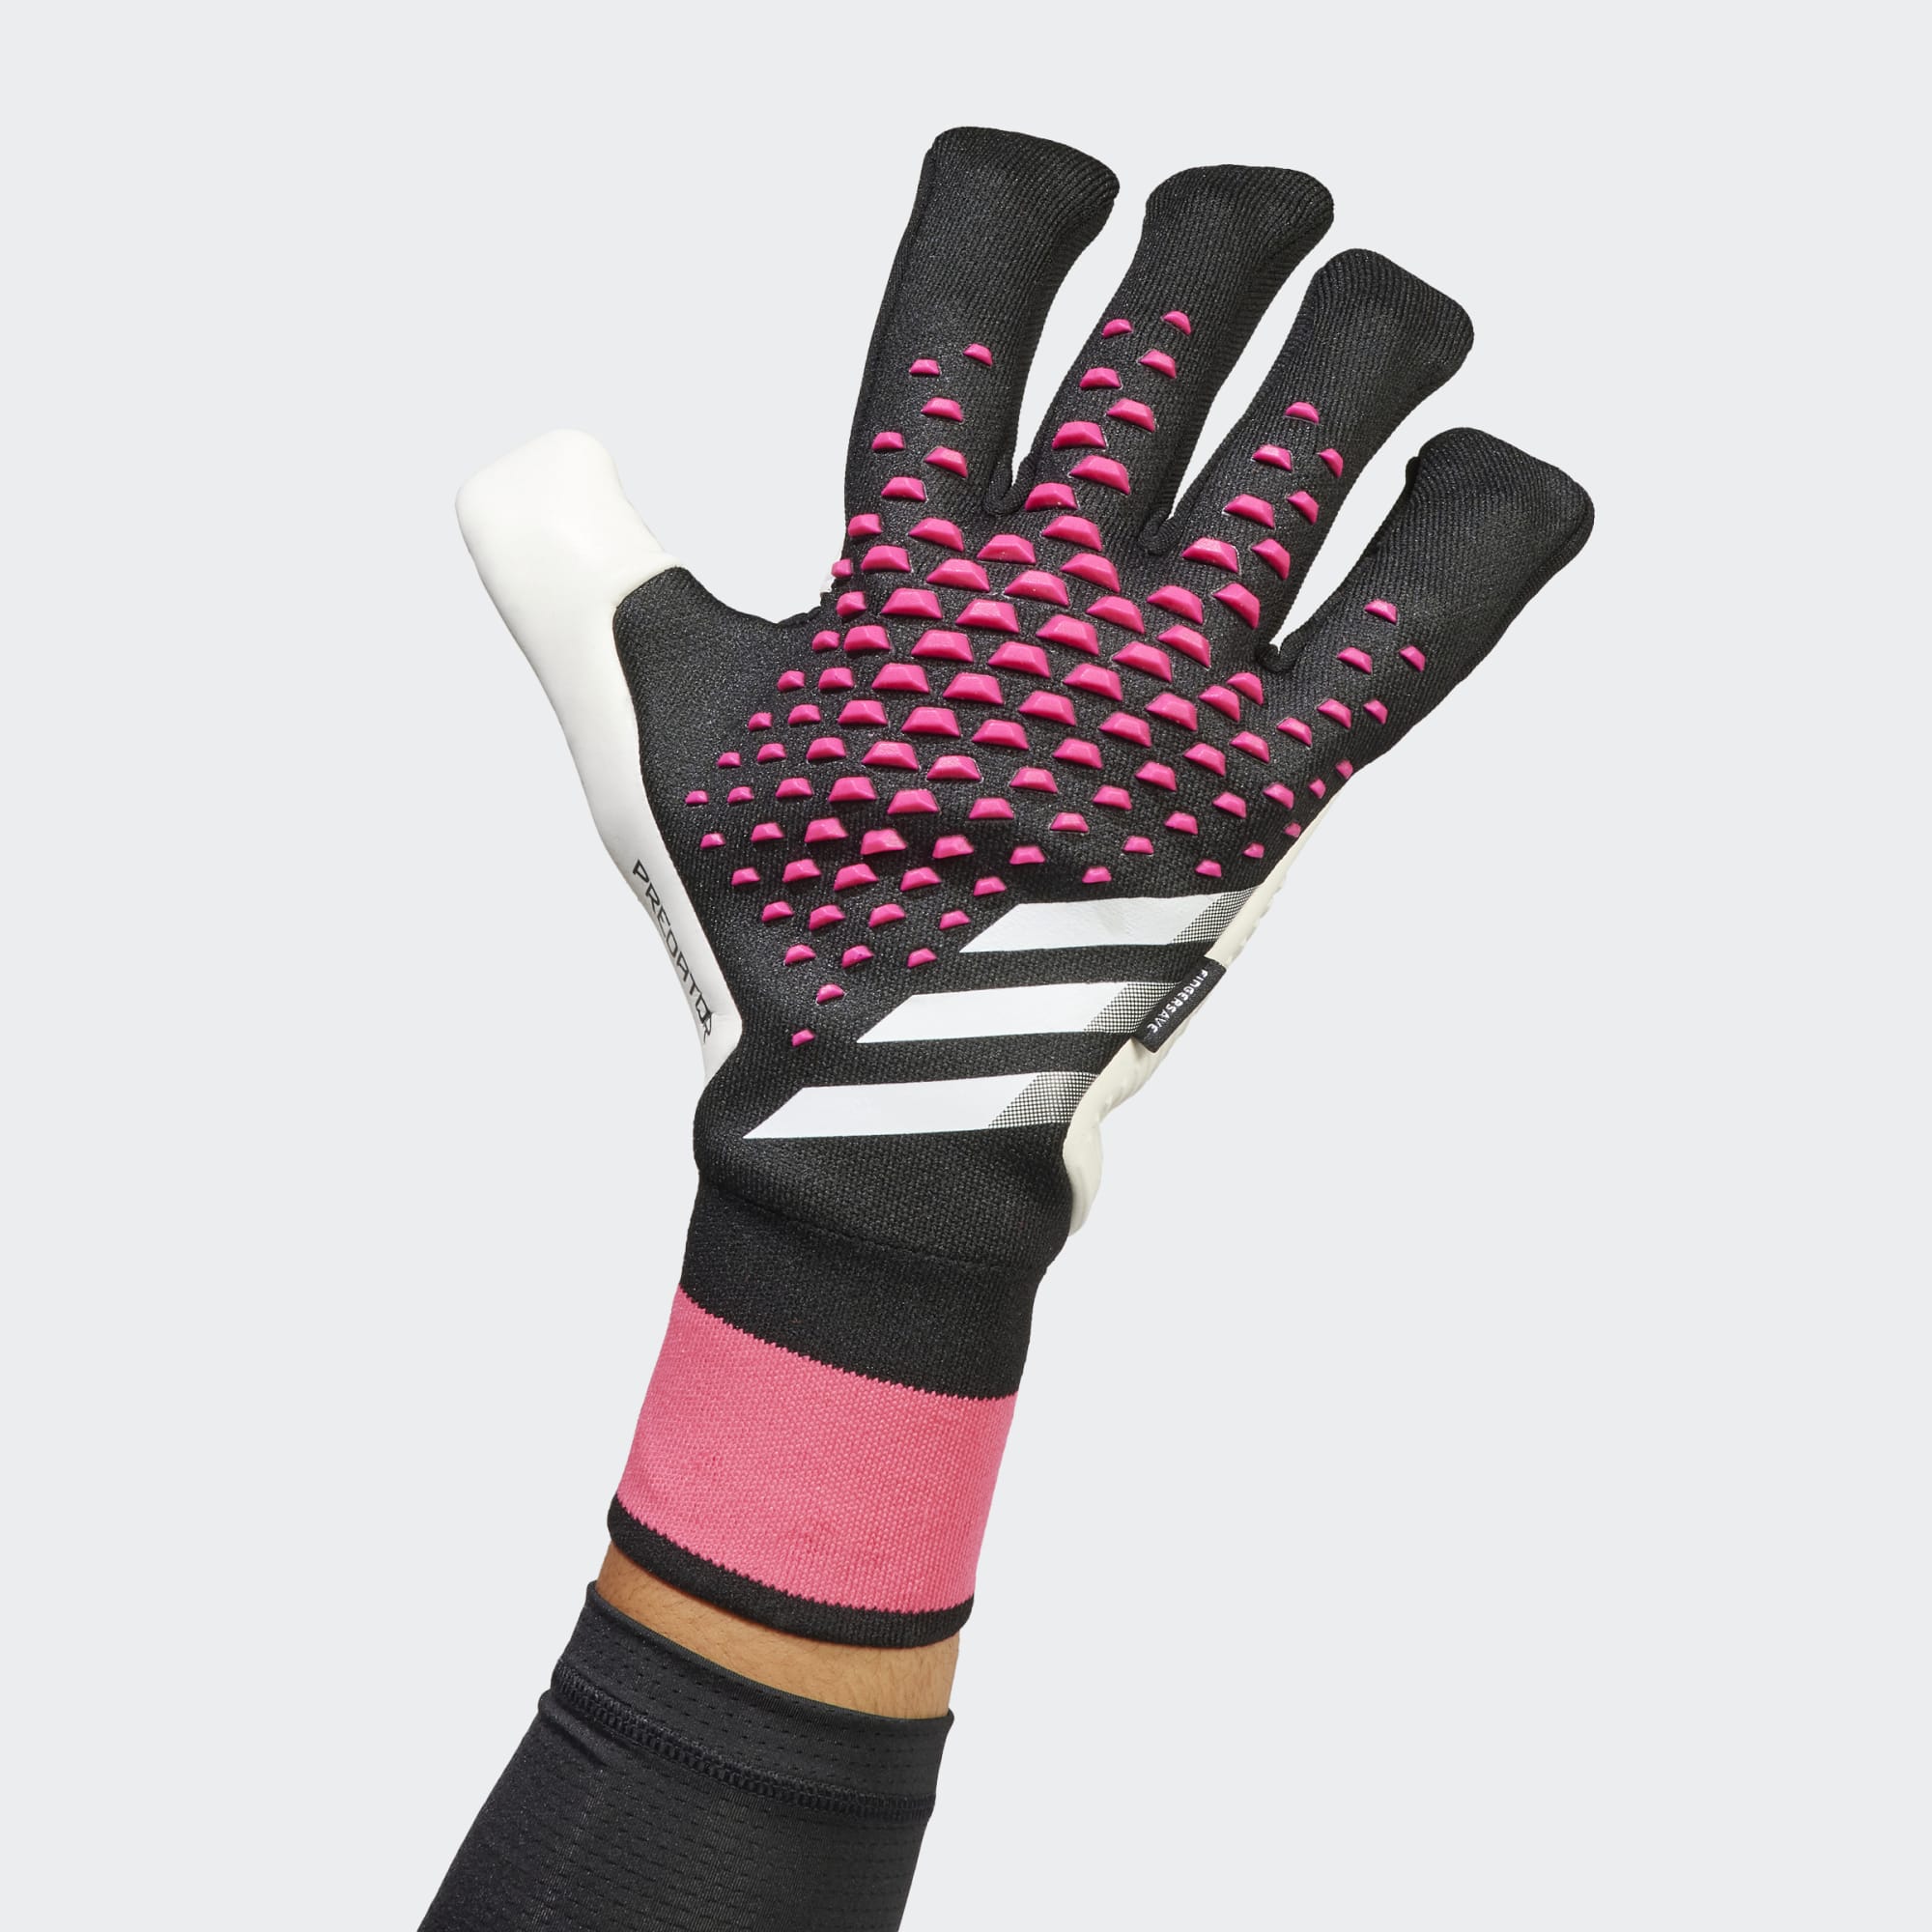 Stefans Soccer - Wisconsin - adidas Predator GL Pro Finger GK Glove Black / White / Team Shock Pink